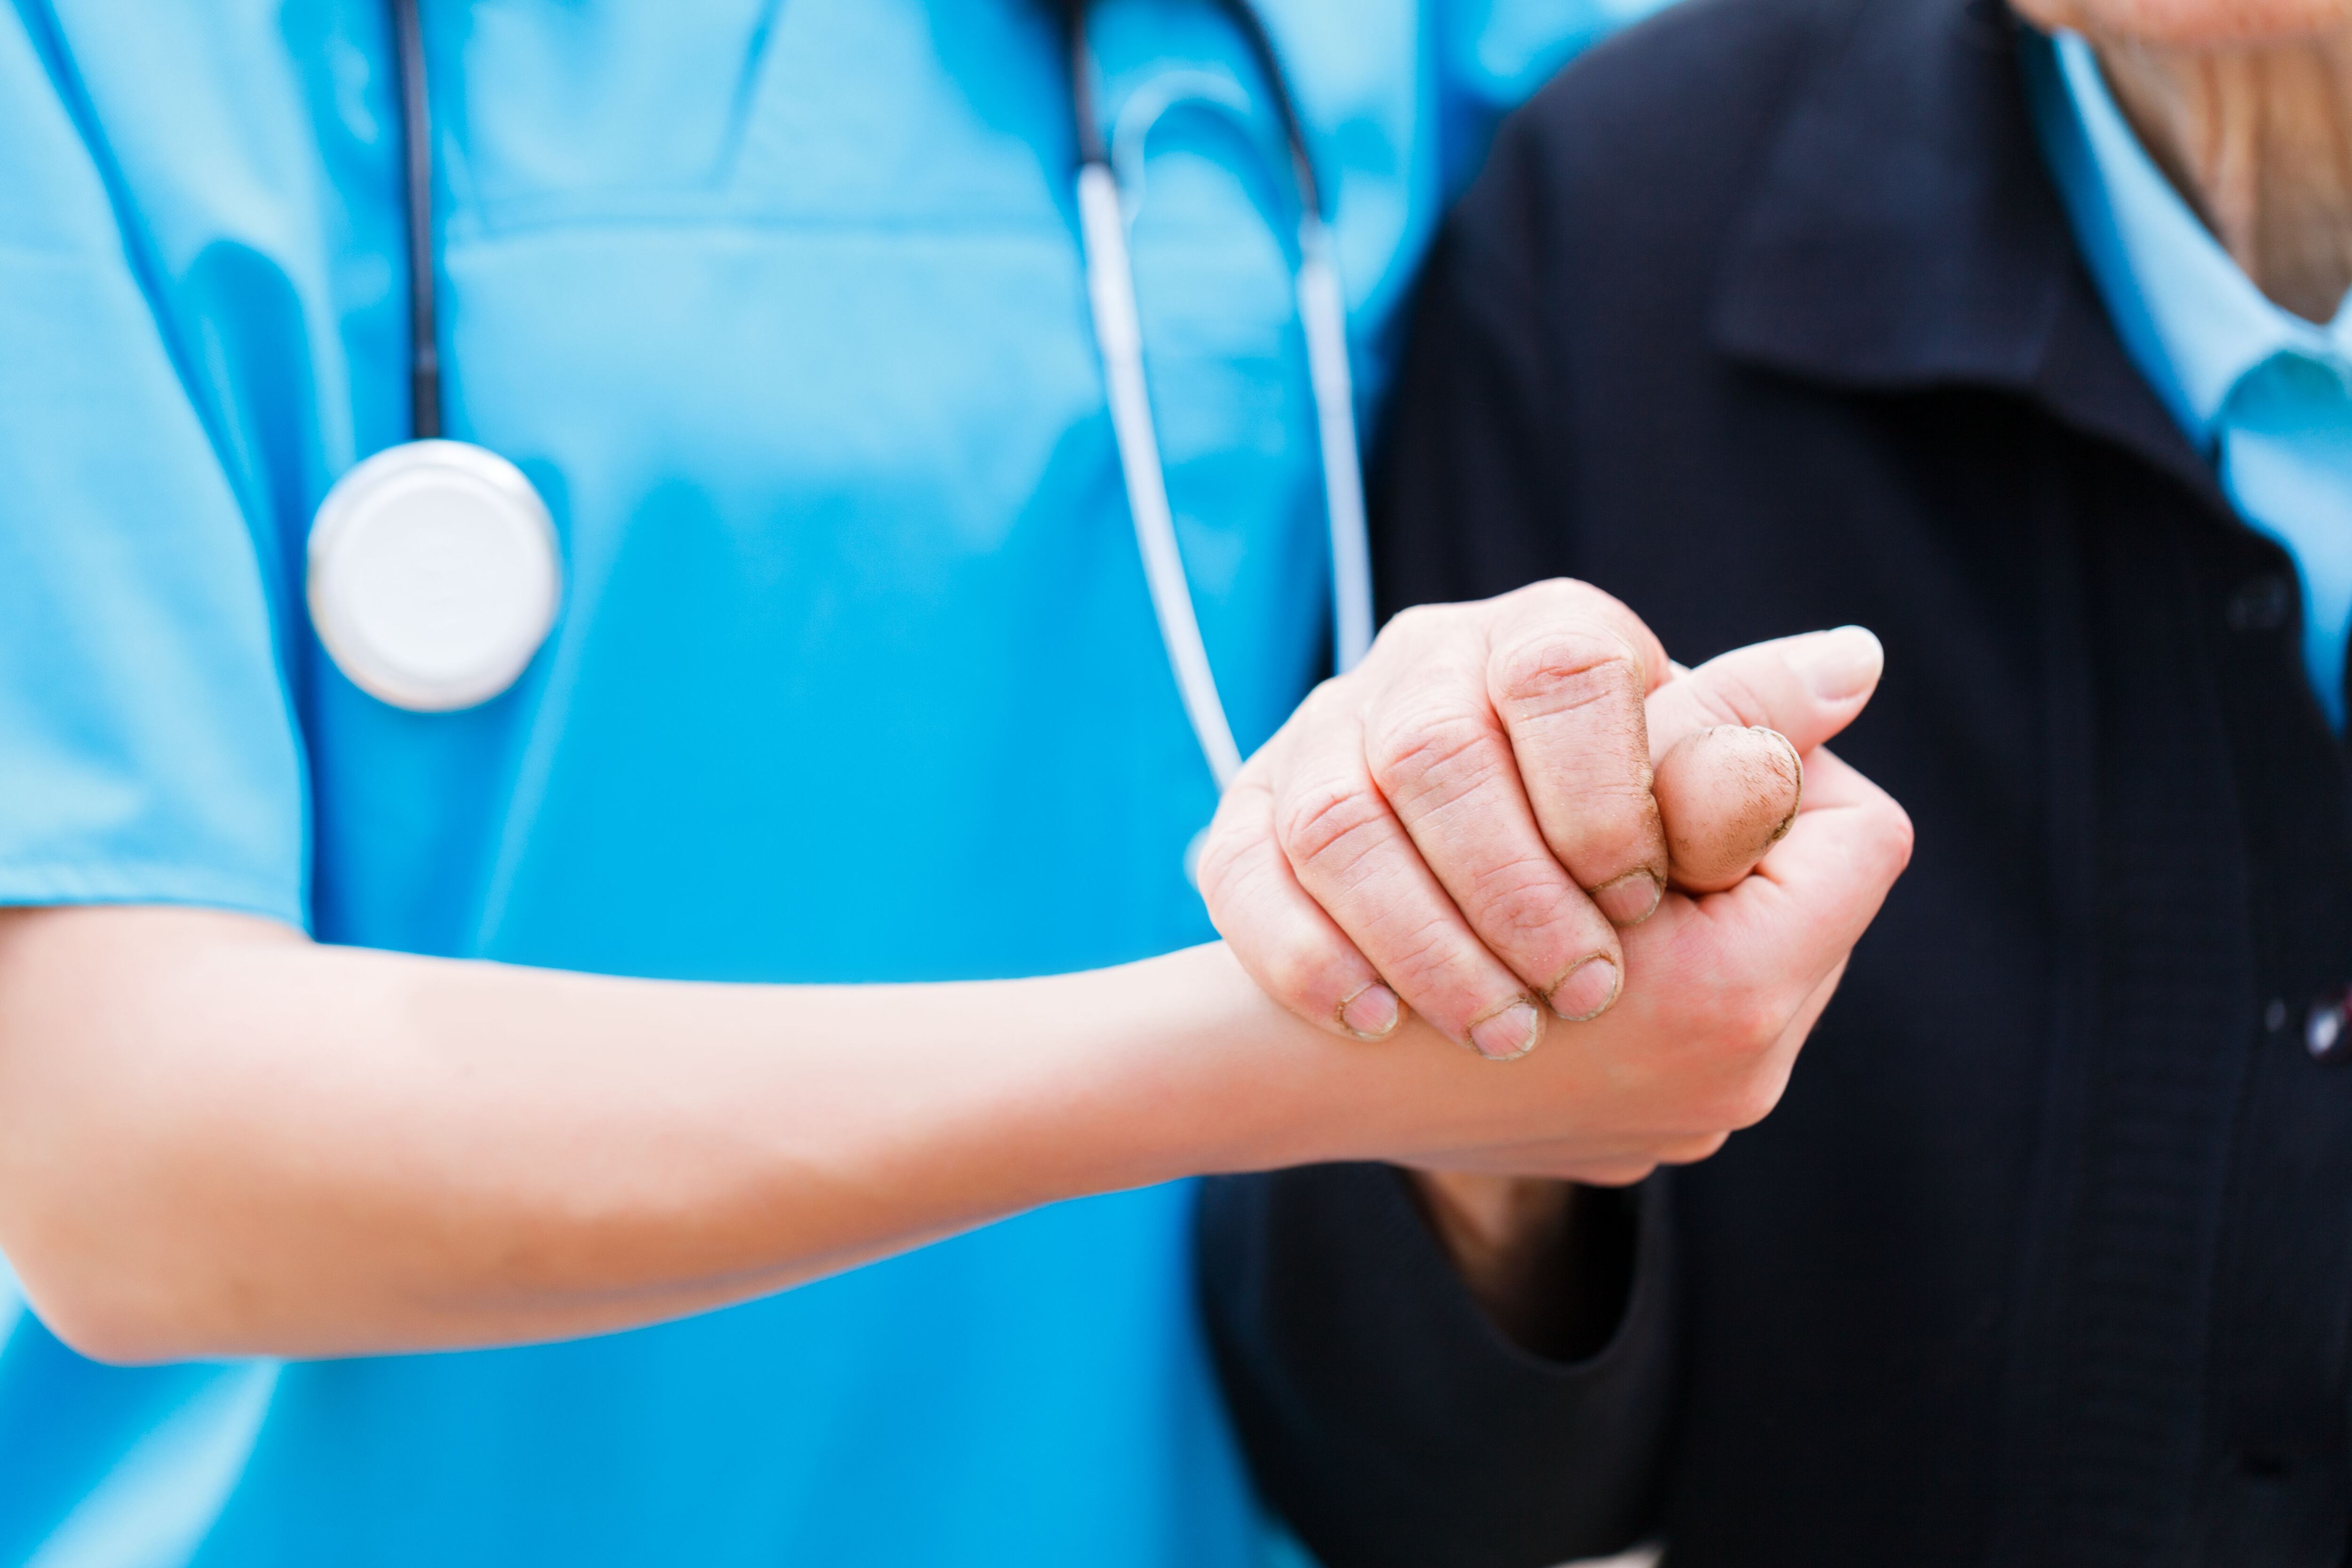 Una enfermera sostiene la mano de una persona con Alzheimer (Shutterstock)